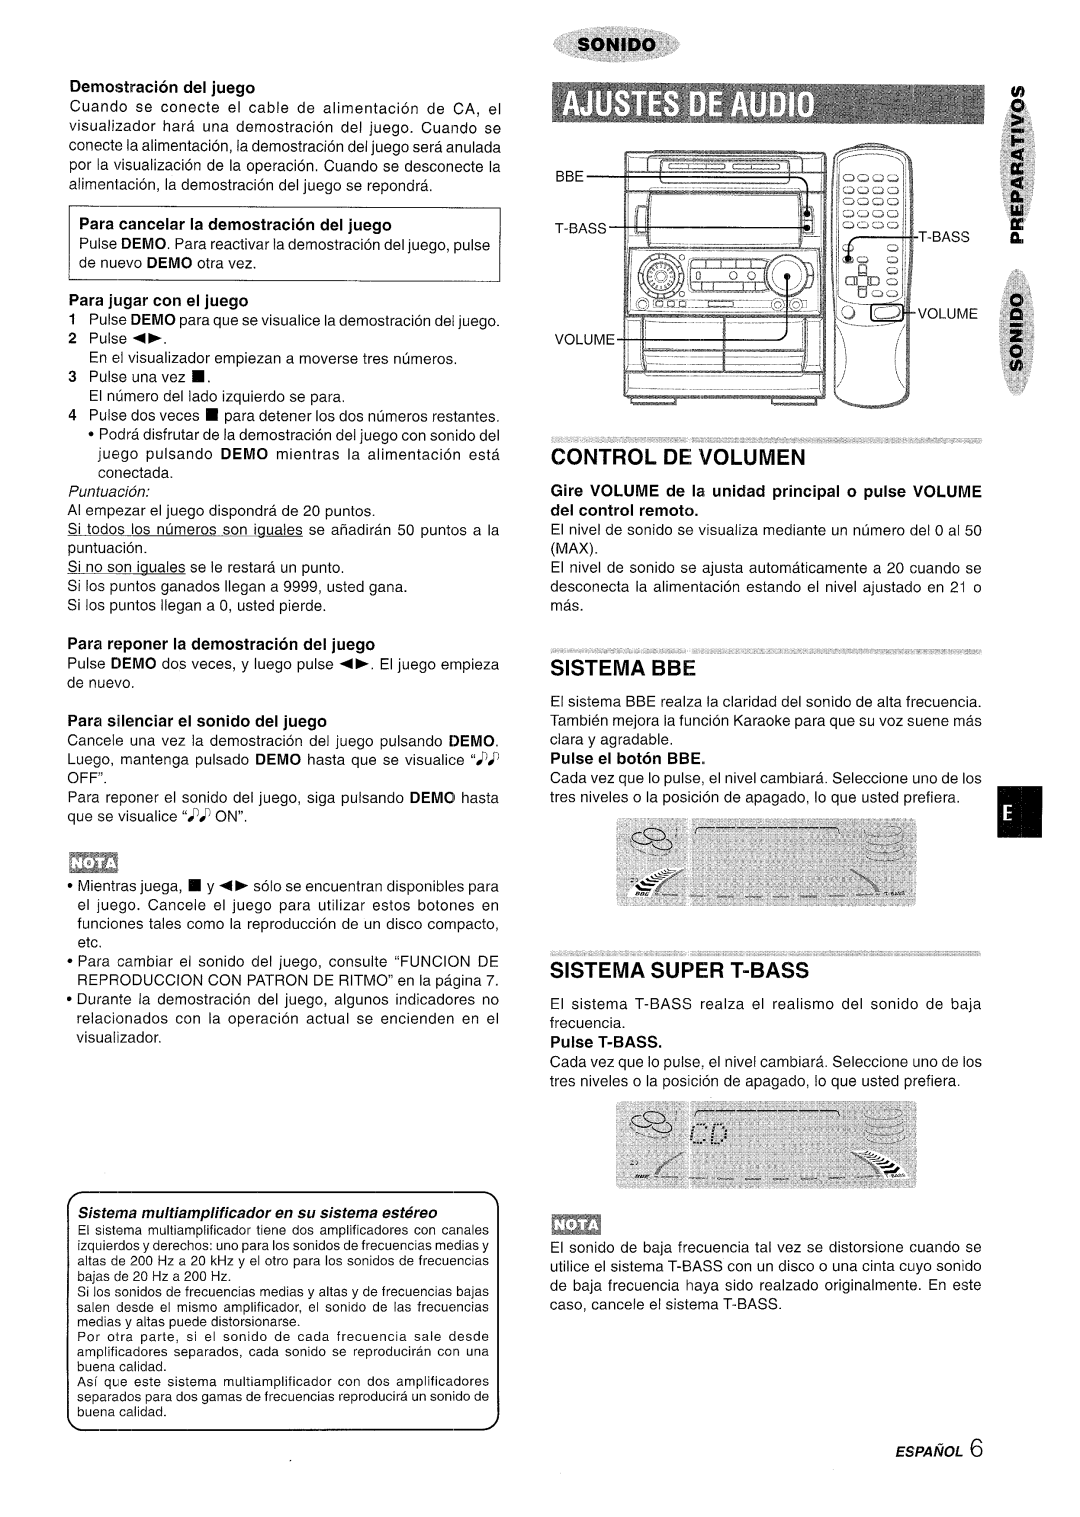 Aiwa NSX-A909 Control De!‘Volumen, Sistema Super T-Bass, Demoetracion del juego, LPara cancelar la demostracion del juego 